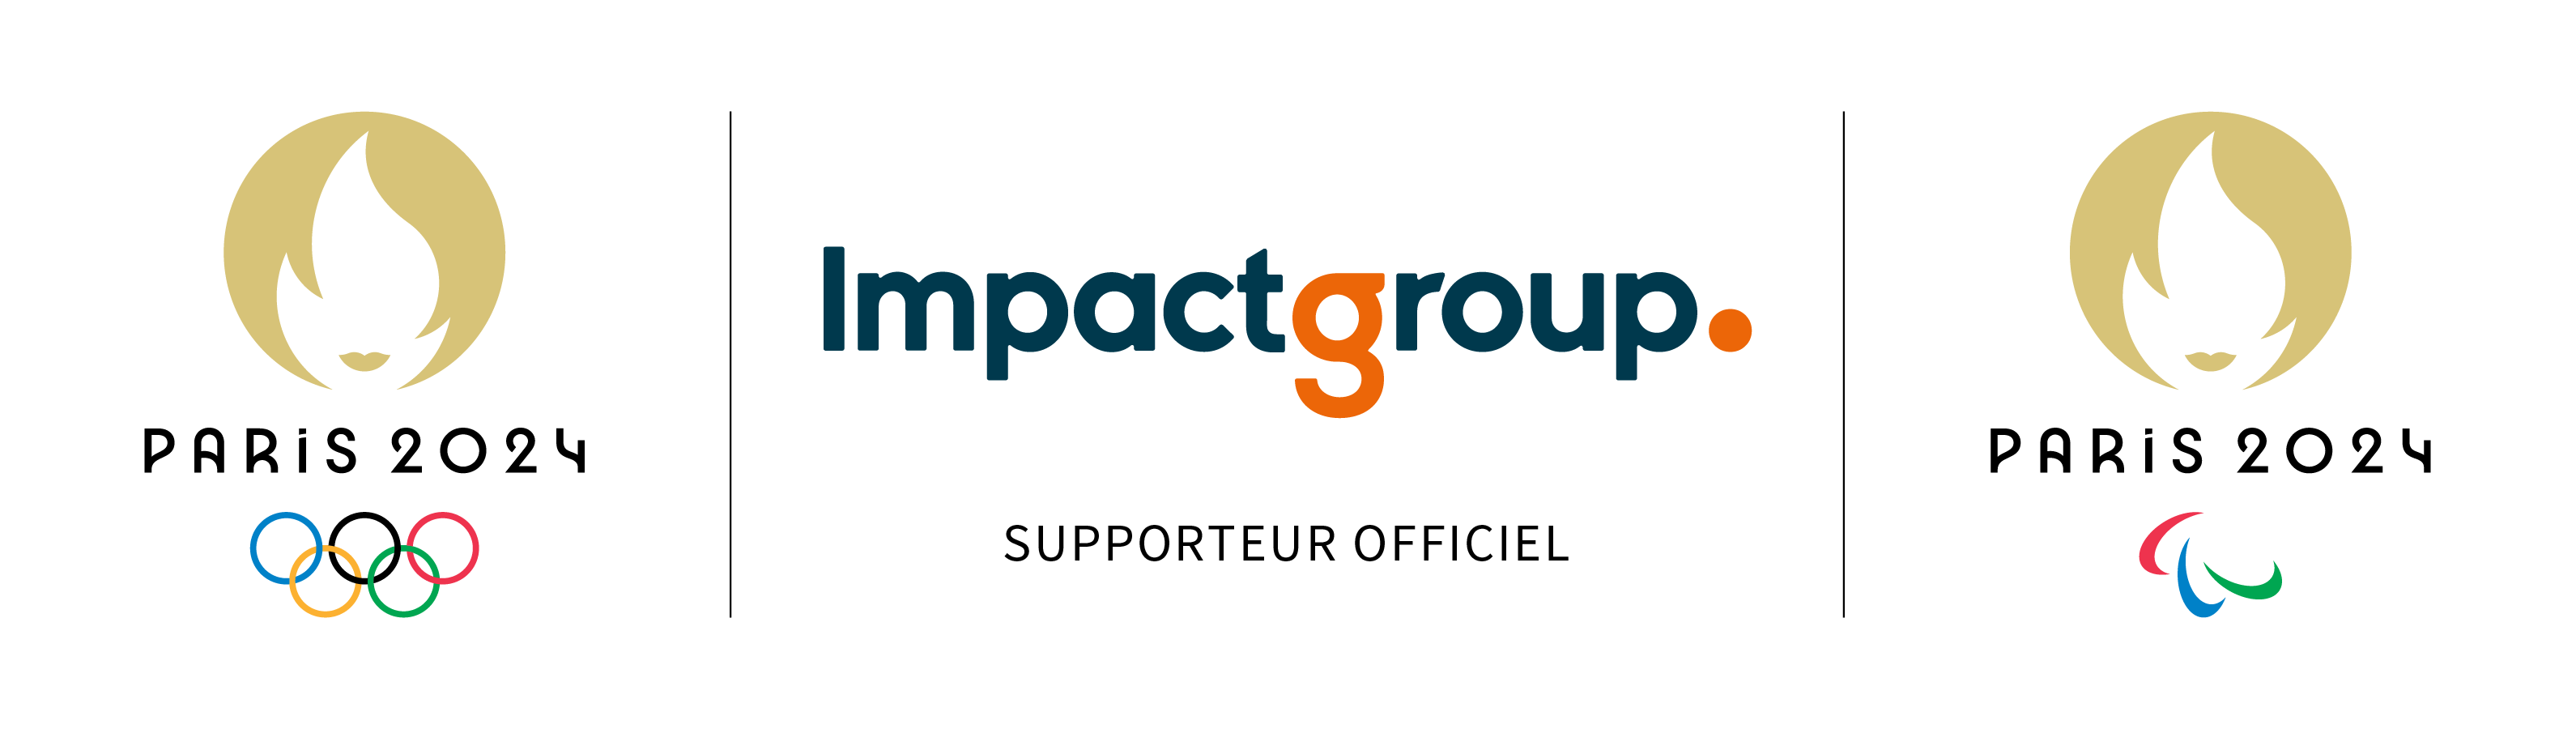 ImpactGroup